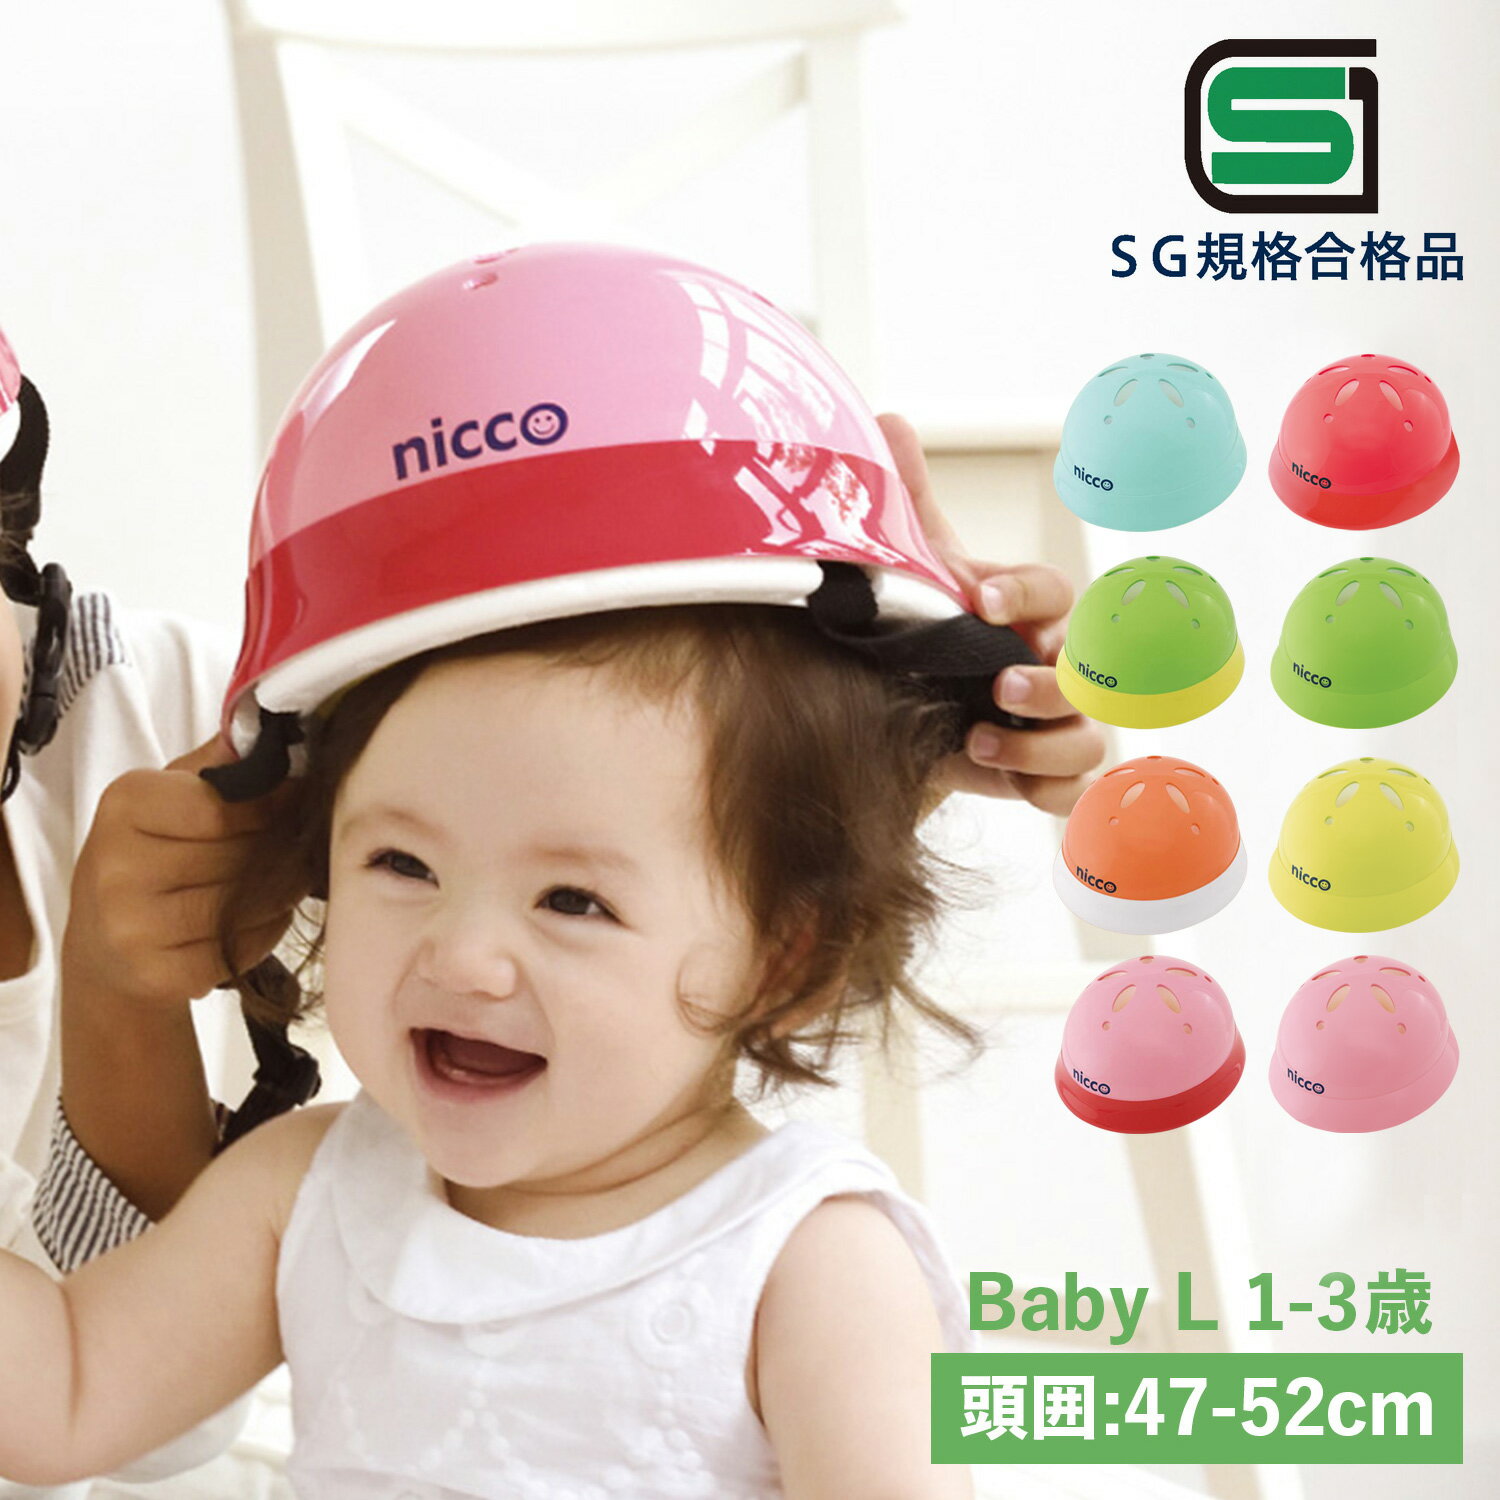 nicco ニコ ヘルメット 自転車 子供用 幼児 ベビー キッズ 1歳 2歳 3歳 赤ちゃん SGマーク サイズ調整可能 男の子 女の子 日本製 KH002L